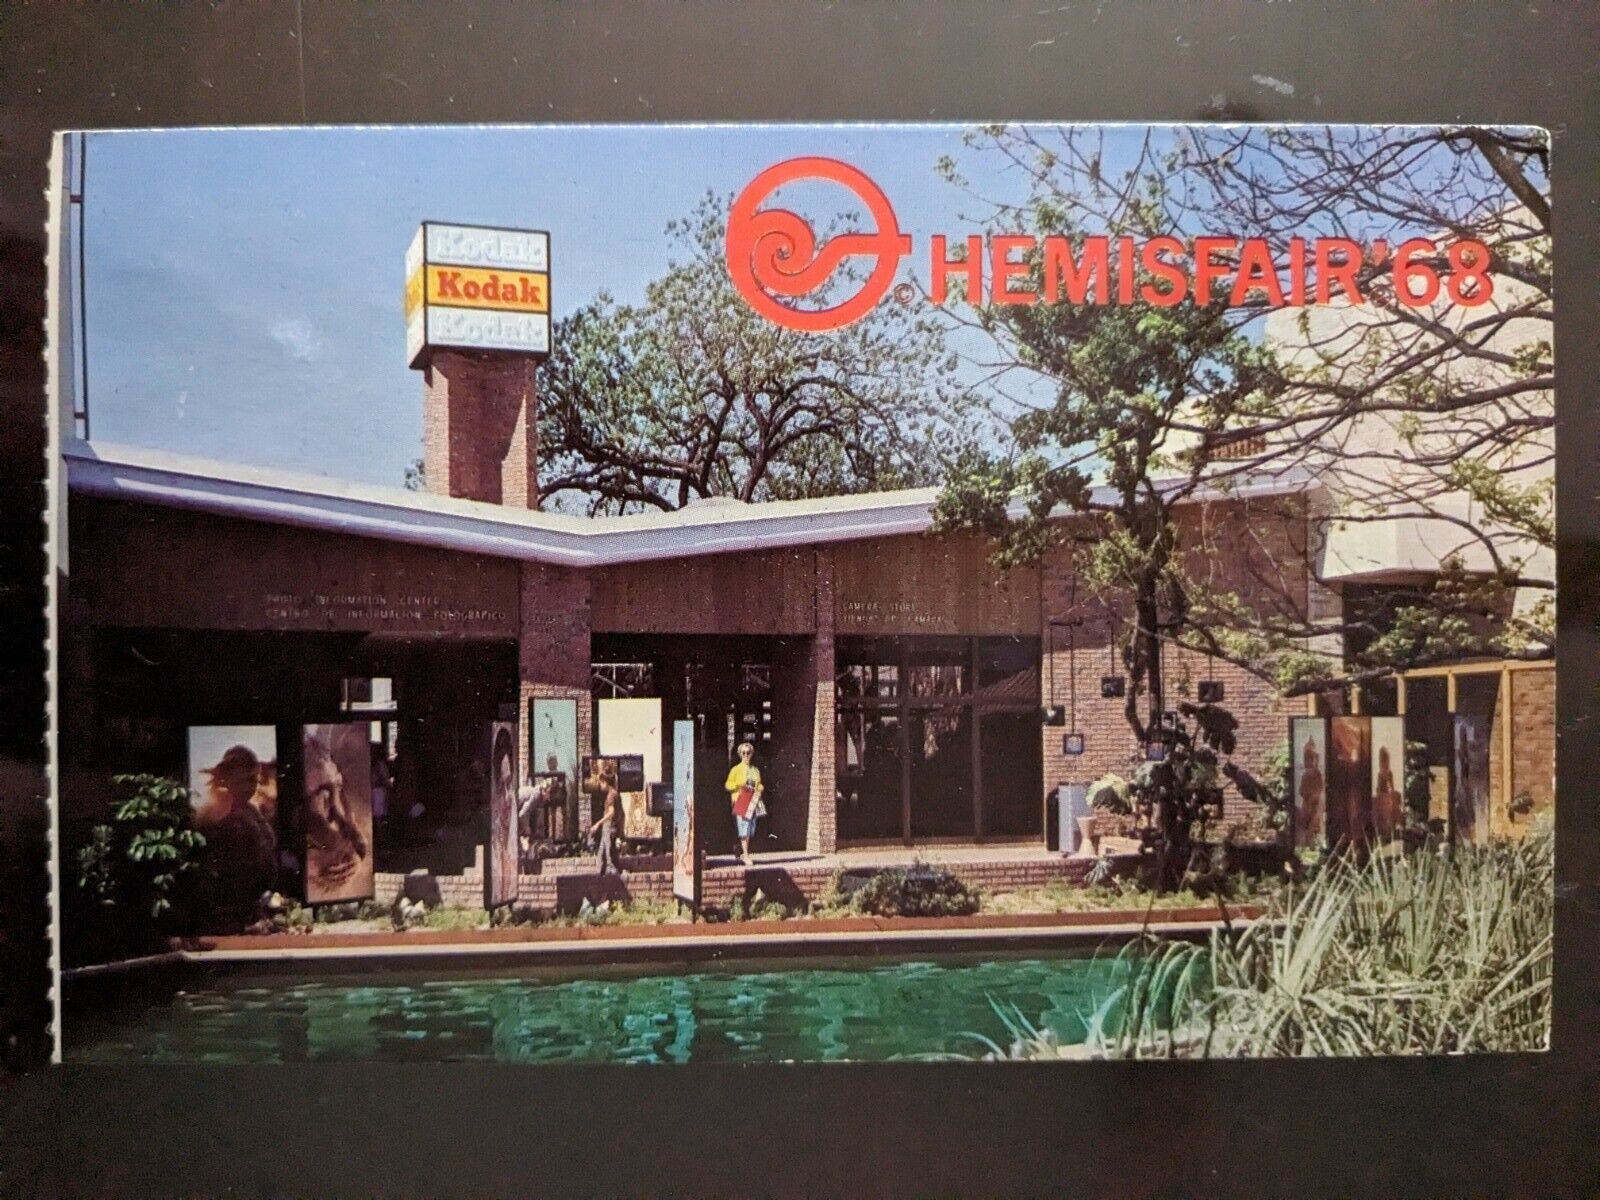 Eastman Kodak Pavilion, 1968 World's Fair HemisFair, San Antonio, TX